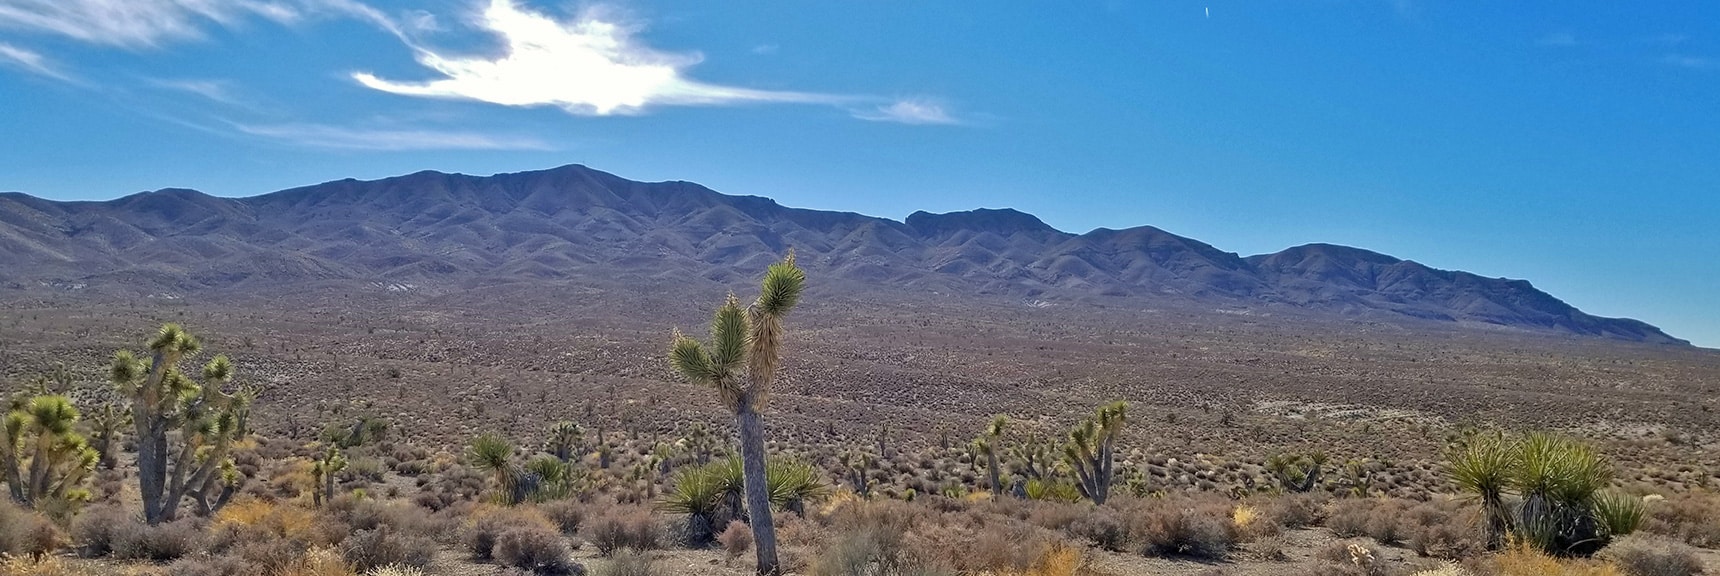 North Side of Gass Peak from Gass Peak Road | Gass Peak Road Circuit | Desert National Wildlife Refuge | Nevada